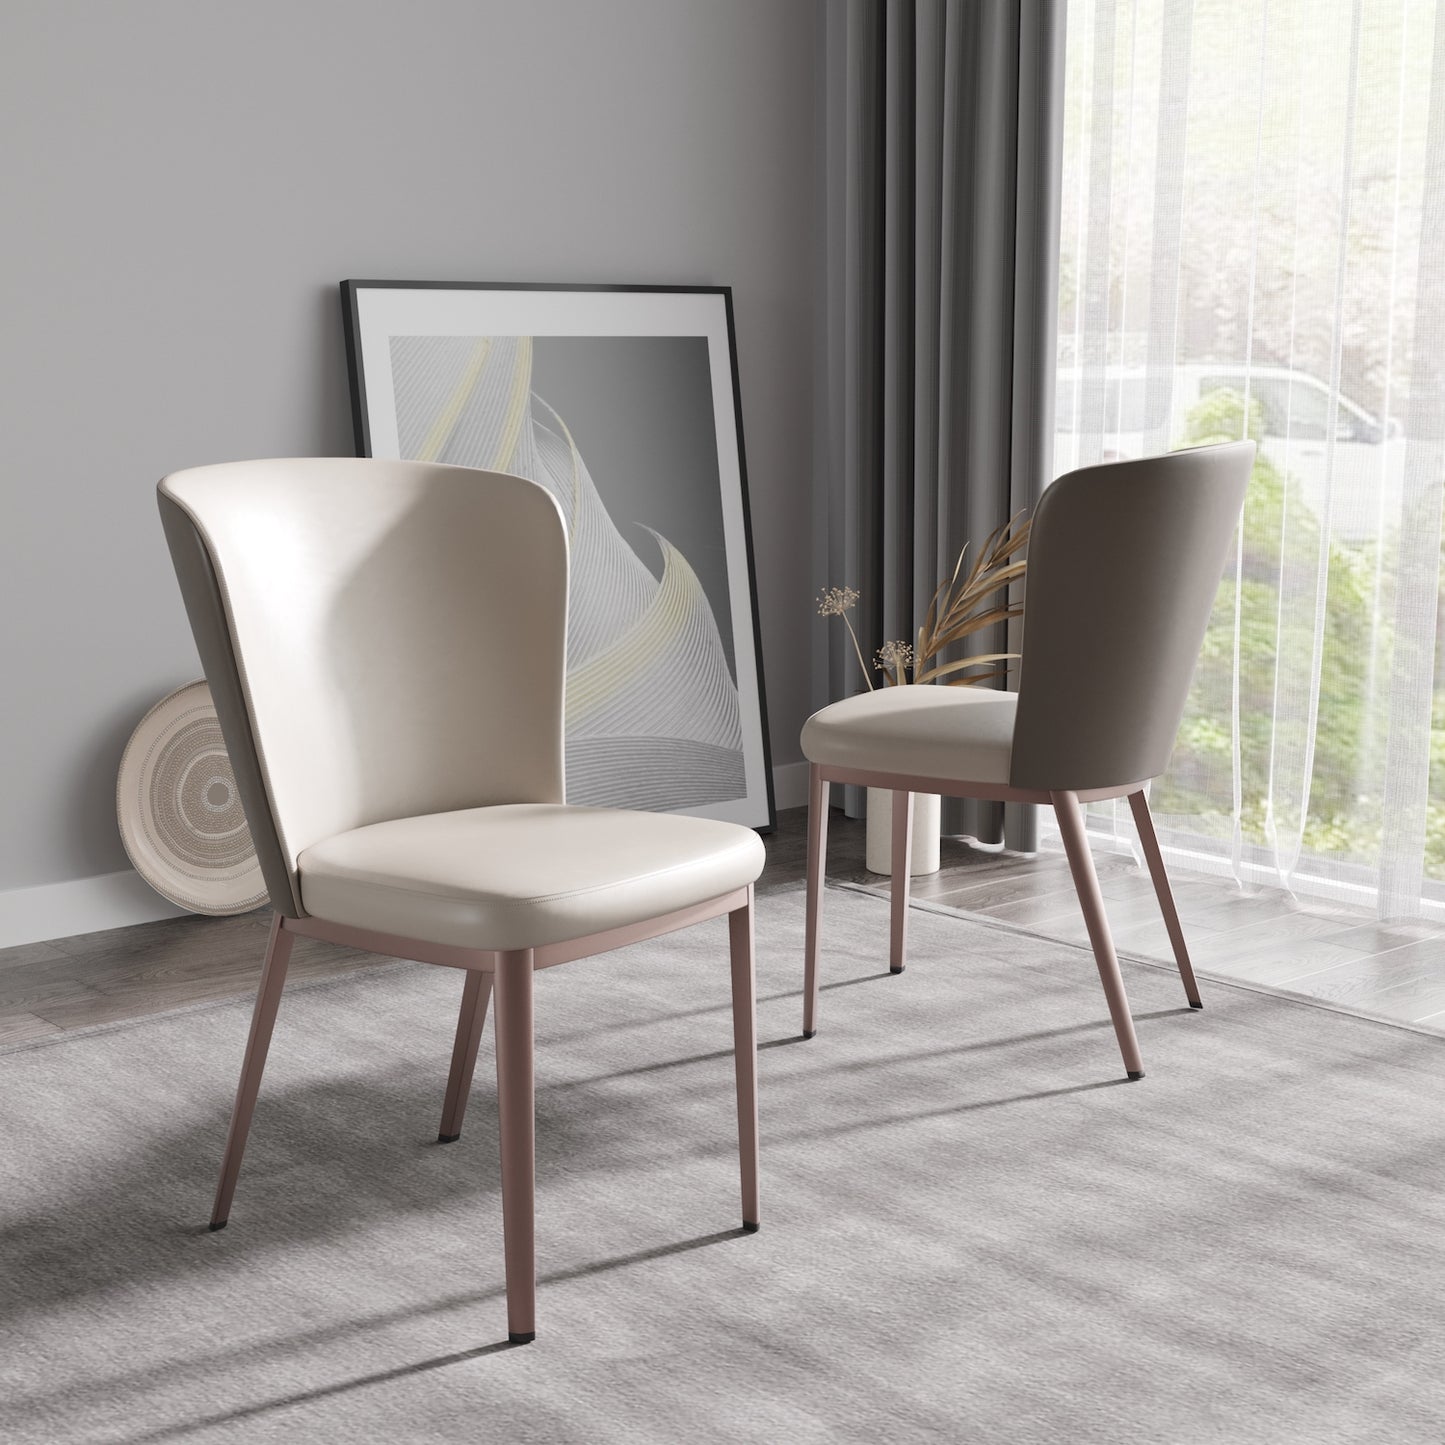 Atunus Modern Dining Side Chair Set of 2 - White & Gray